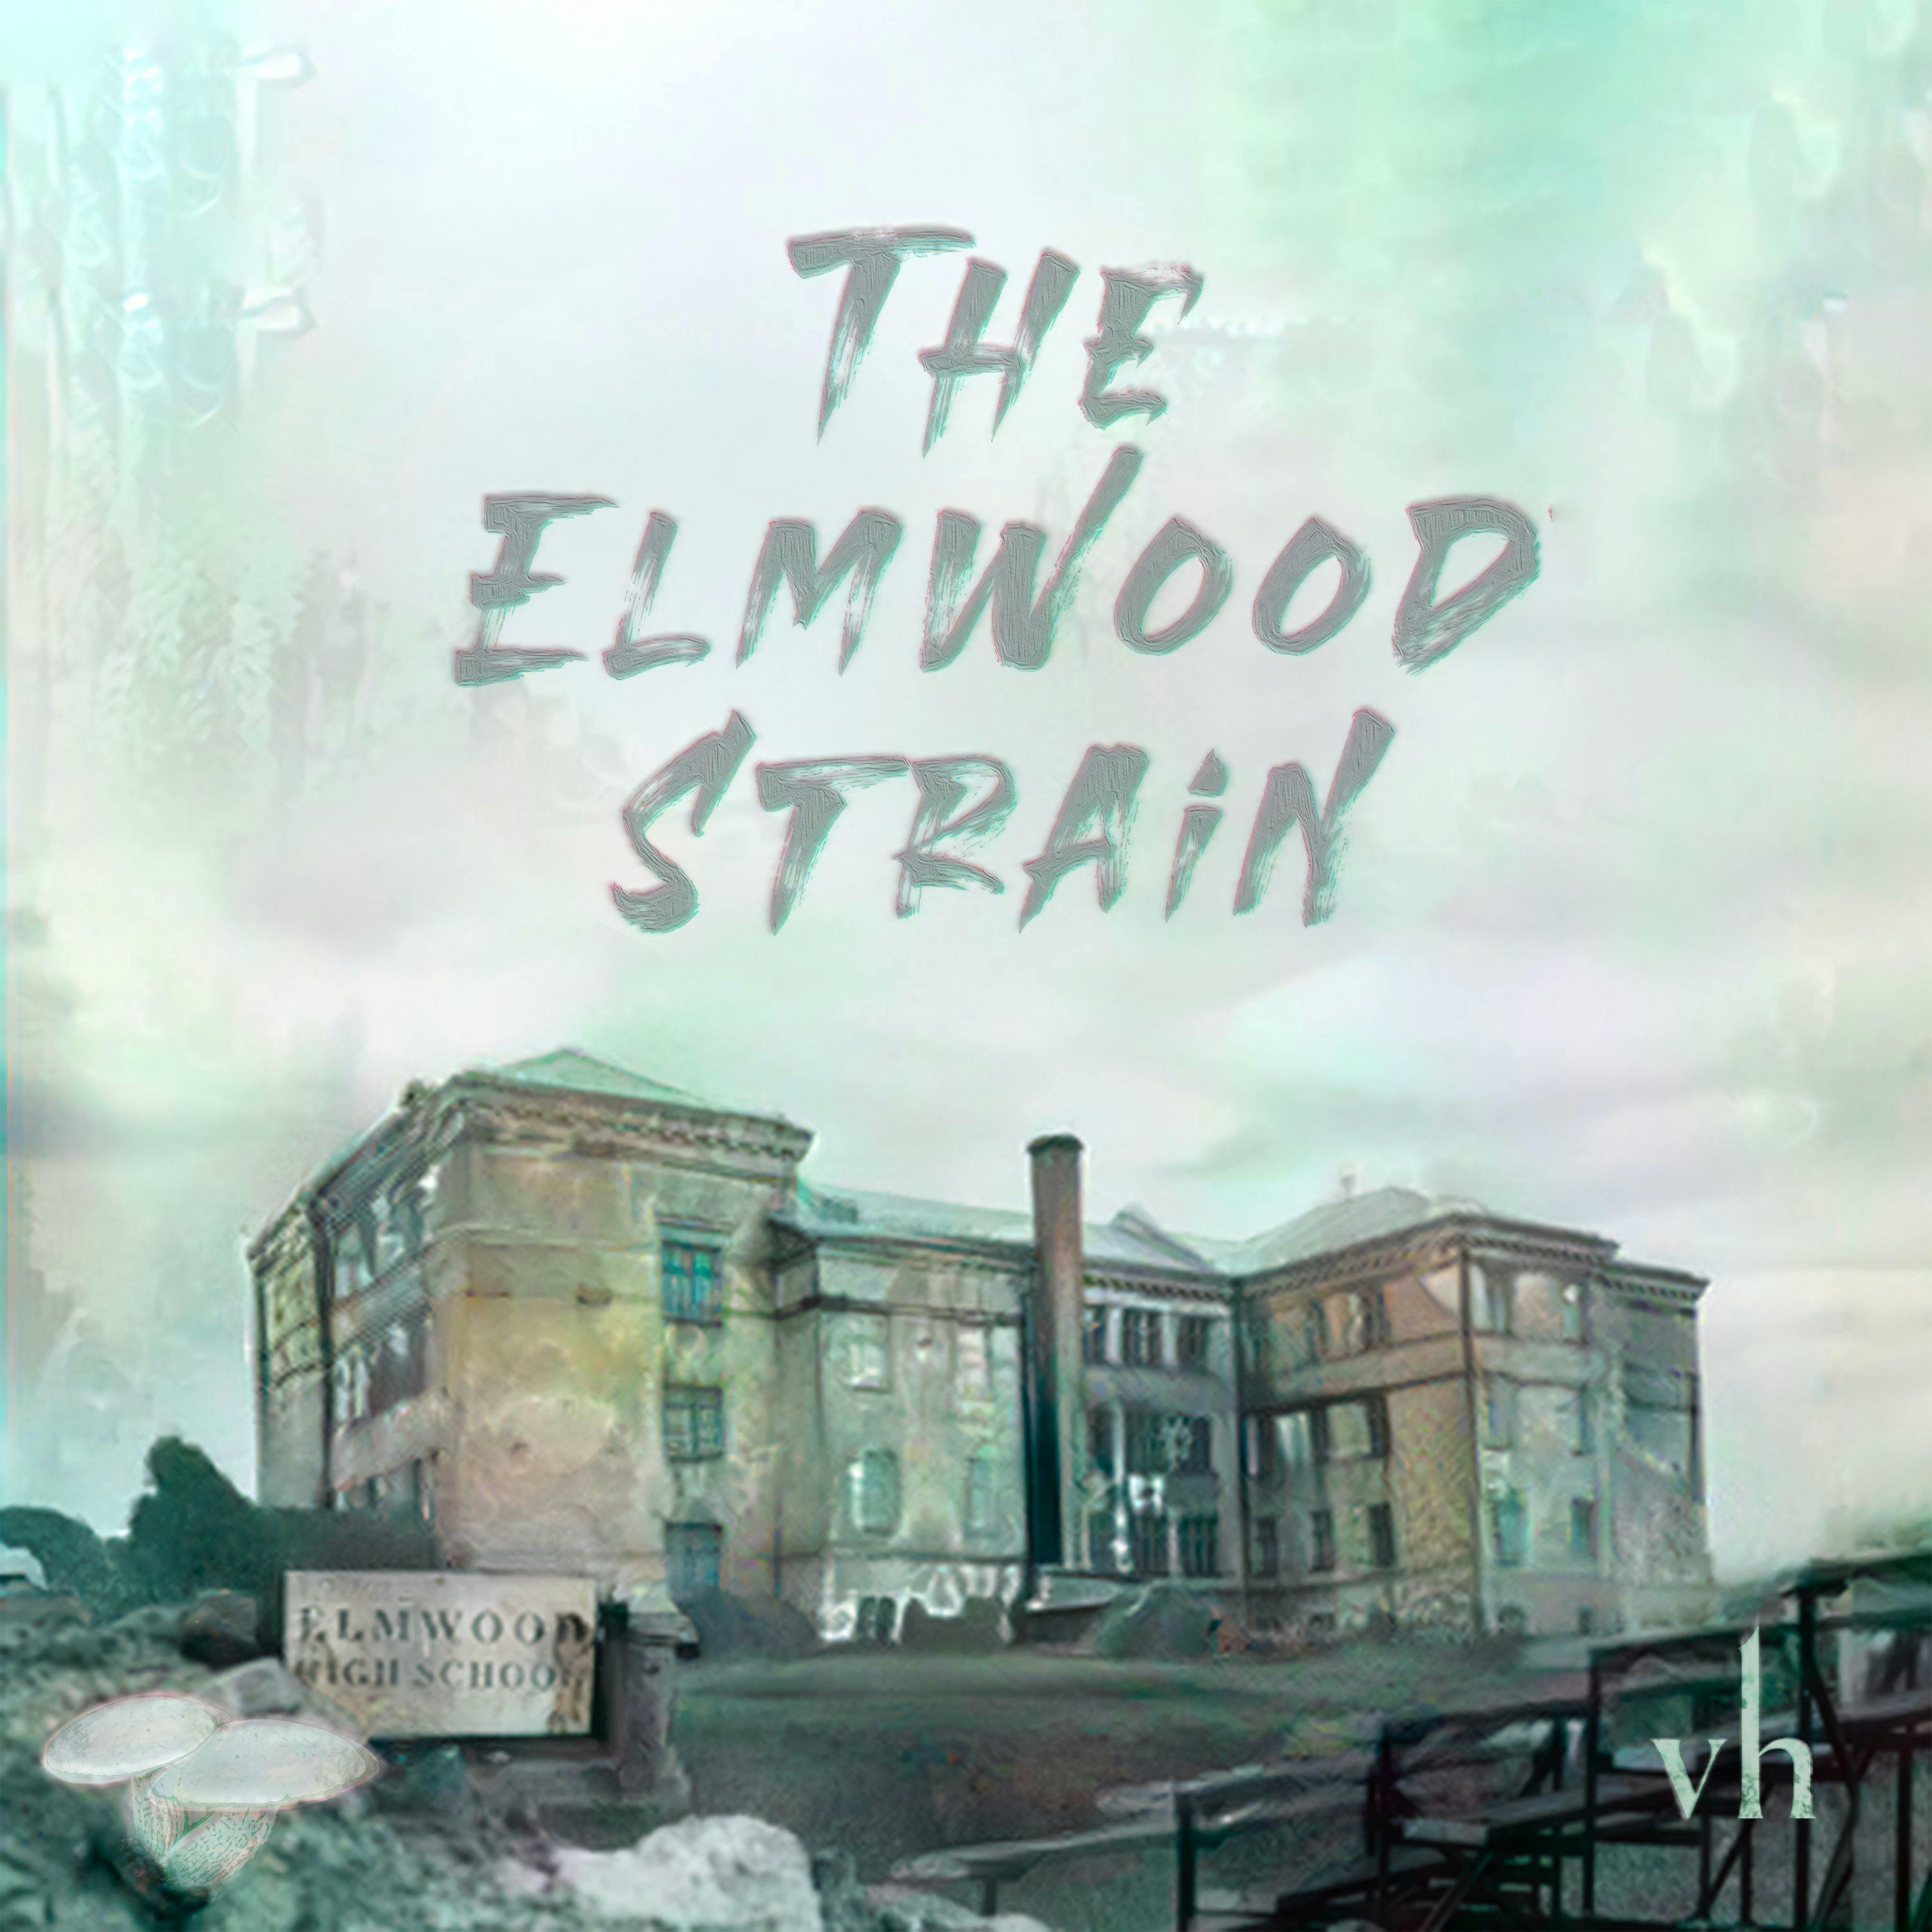 "The Elmwood Strain" Podcast